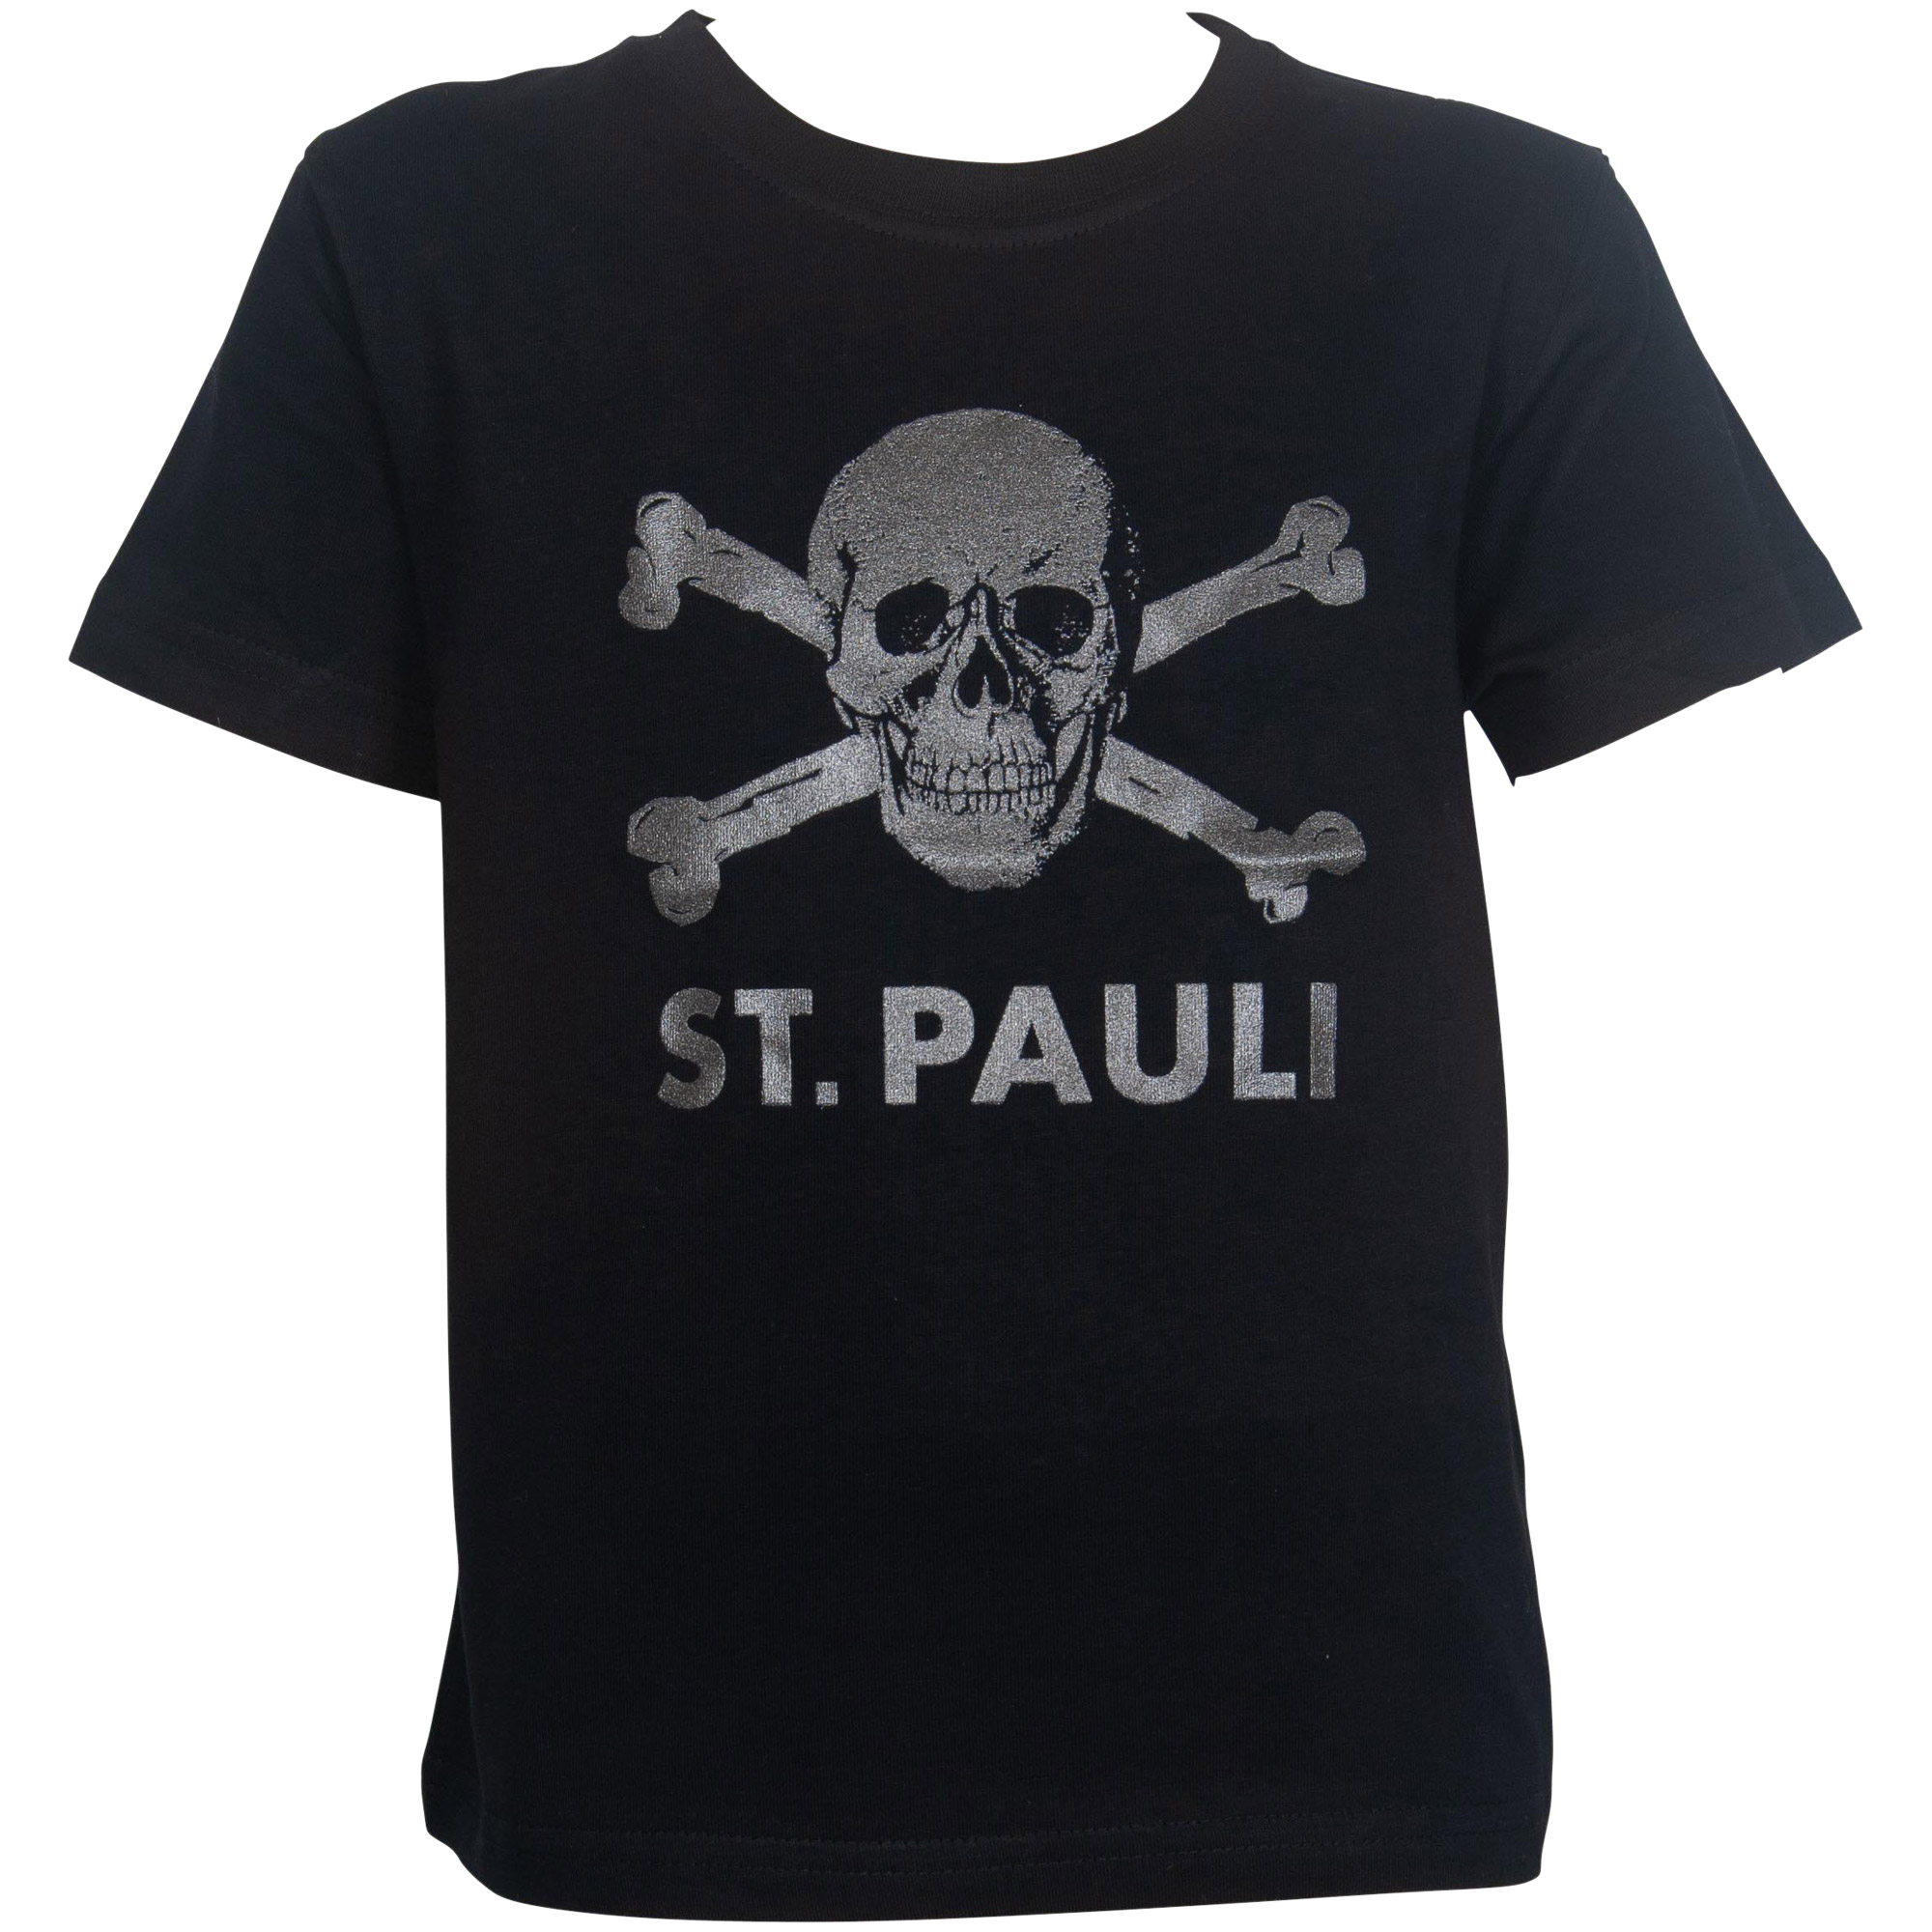 FC St. Pauli - Kinder T-Shirt Glitzer Totenkopf Anthrazit - schwarz